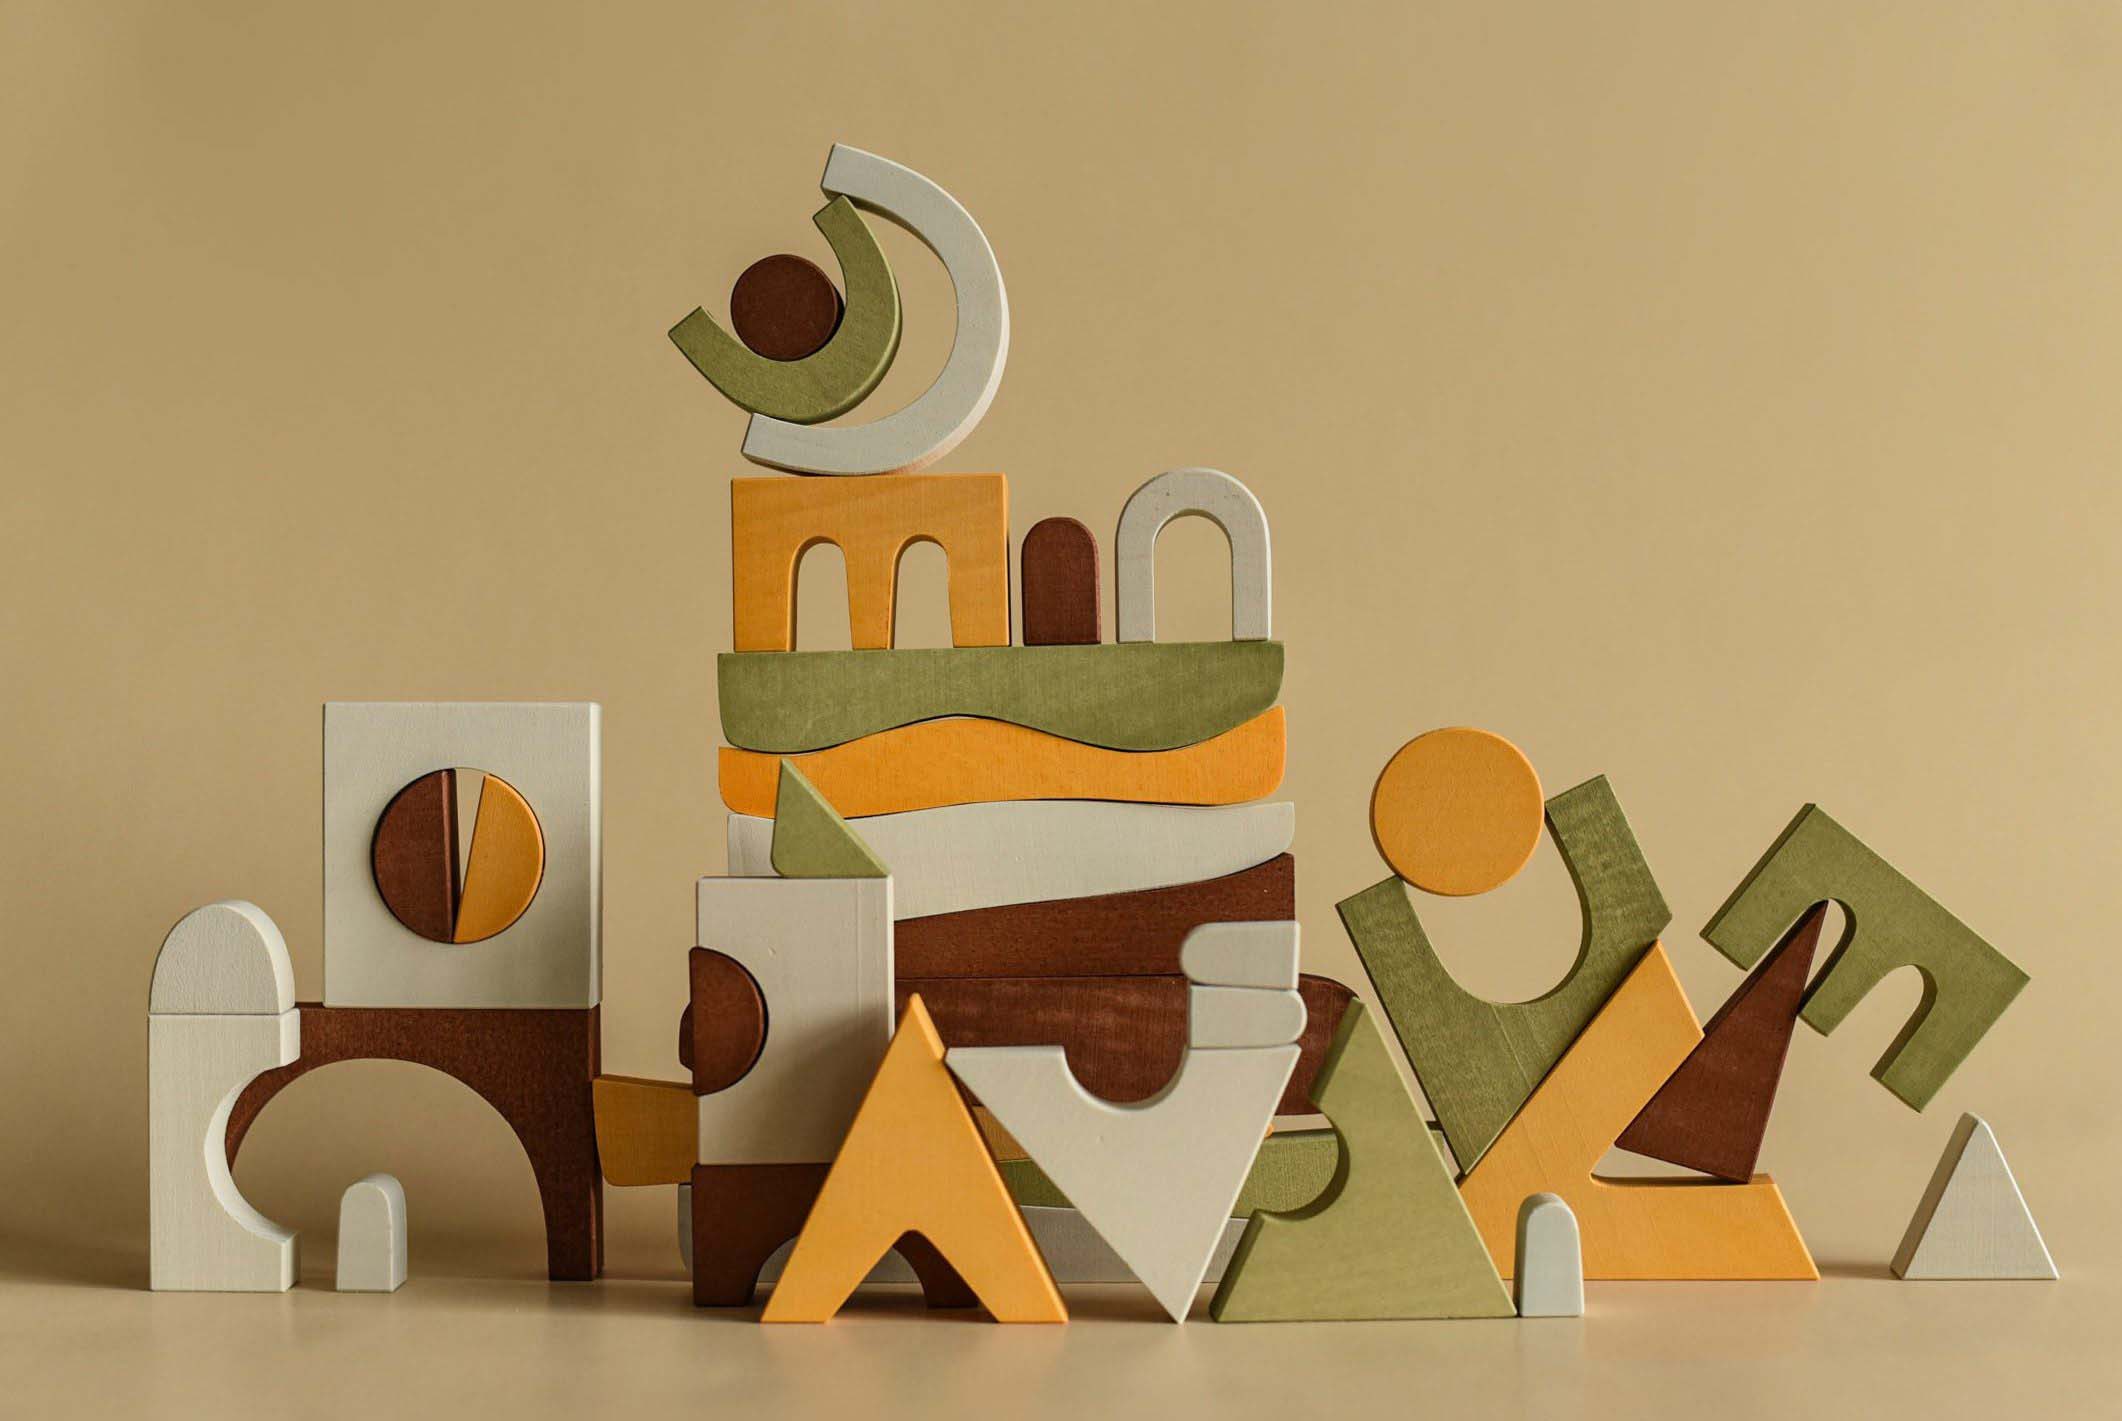 Handmade wooden puzzle consisting of 37 blocks